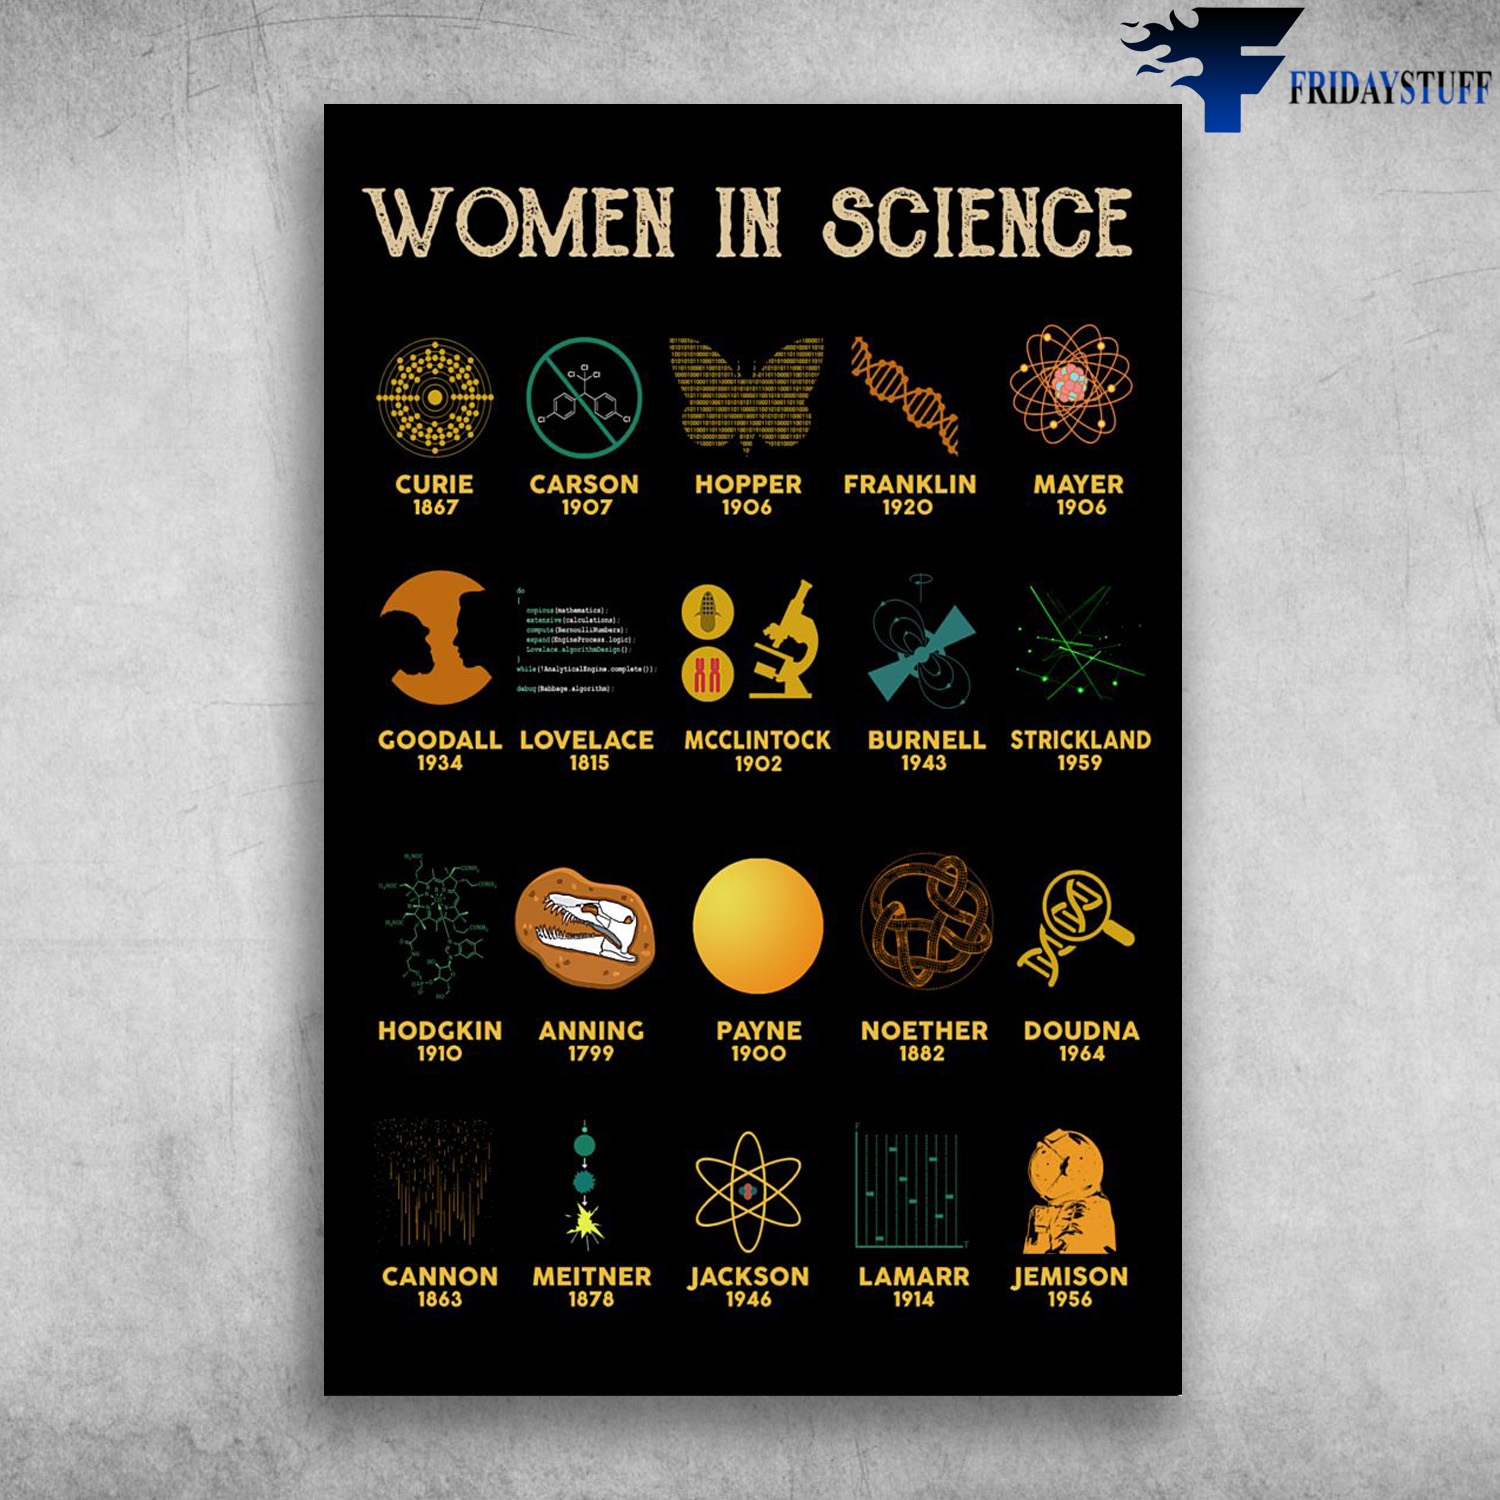 Women In Science - Curie, Carson, Hopper, Franklin, Mayer, Goodall, Lovelace, Mcclintock, Burnell, Strickland, Hodgkin, Anning, Payne, Noether, Doudna, Cannon, Meitner, Jackson, Lamarr, Jemison